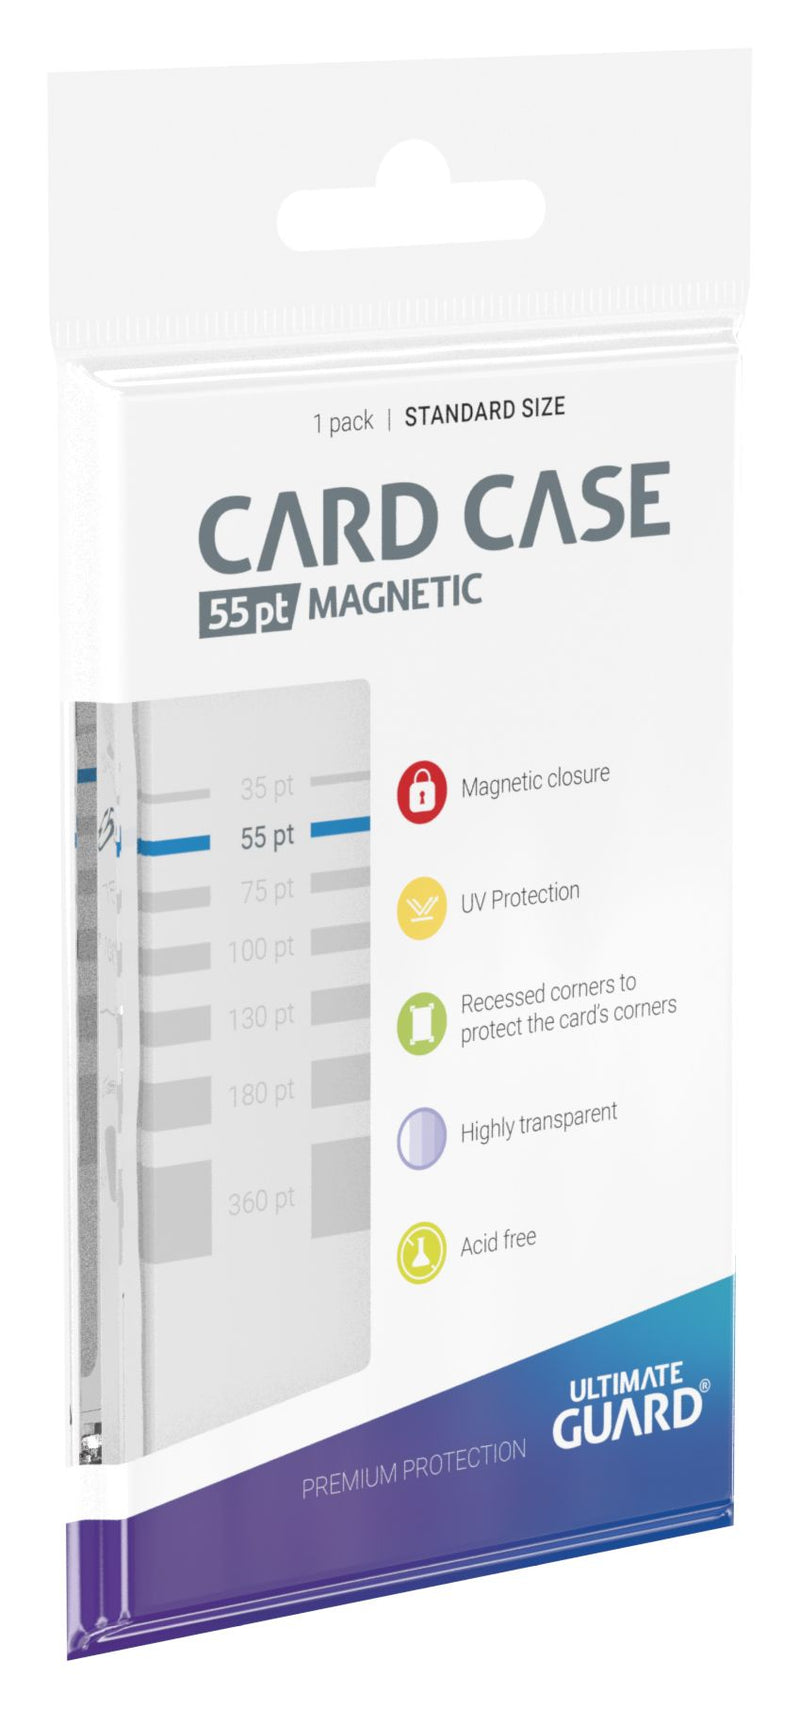 Ultimate Guard Magnetic Card Case, 55pt